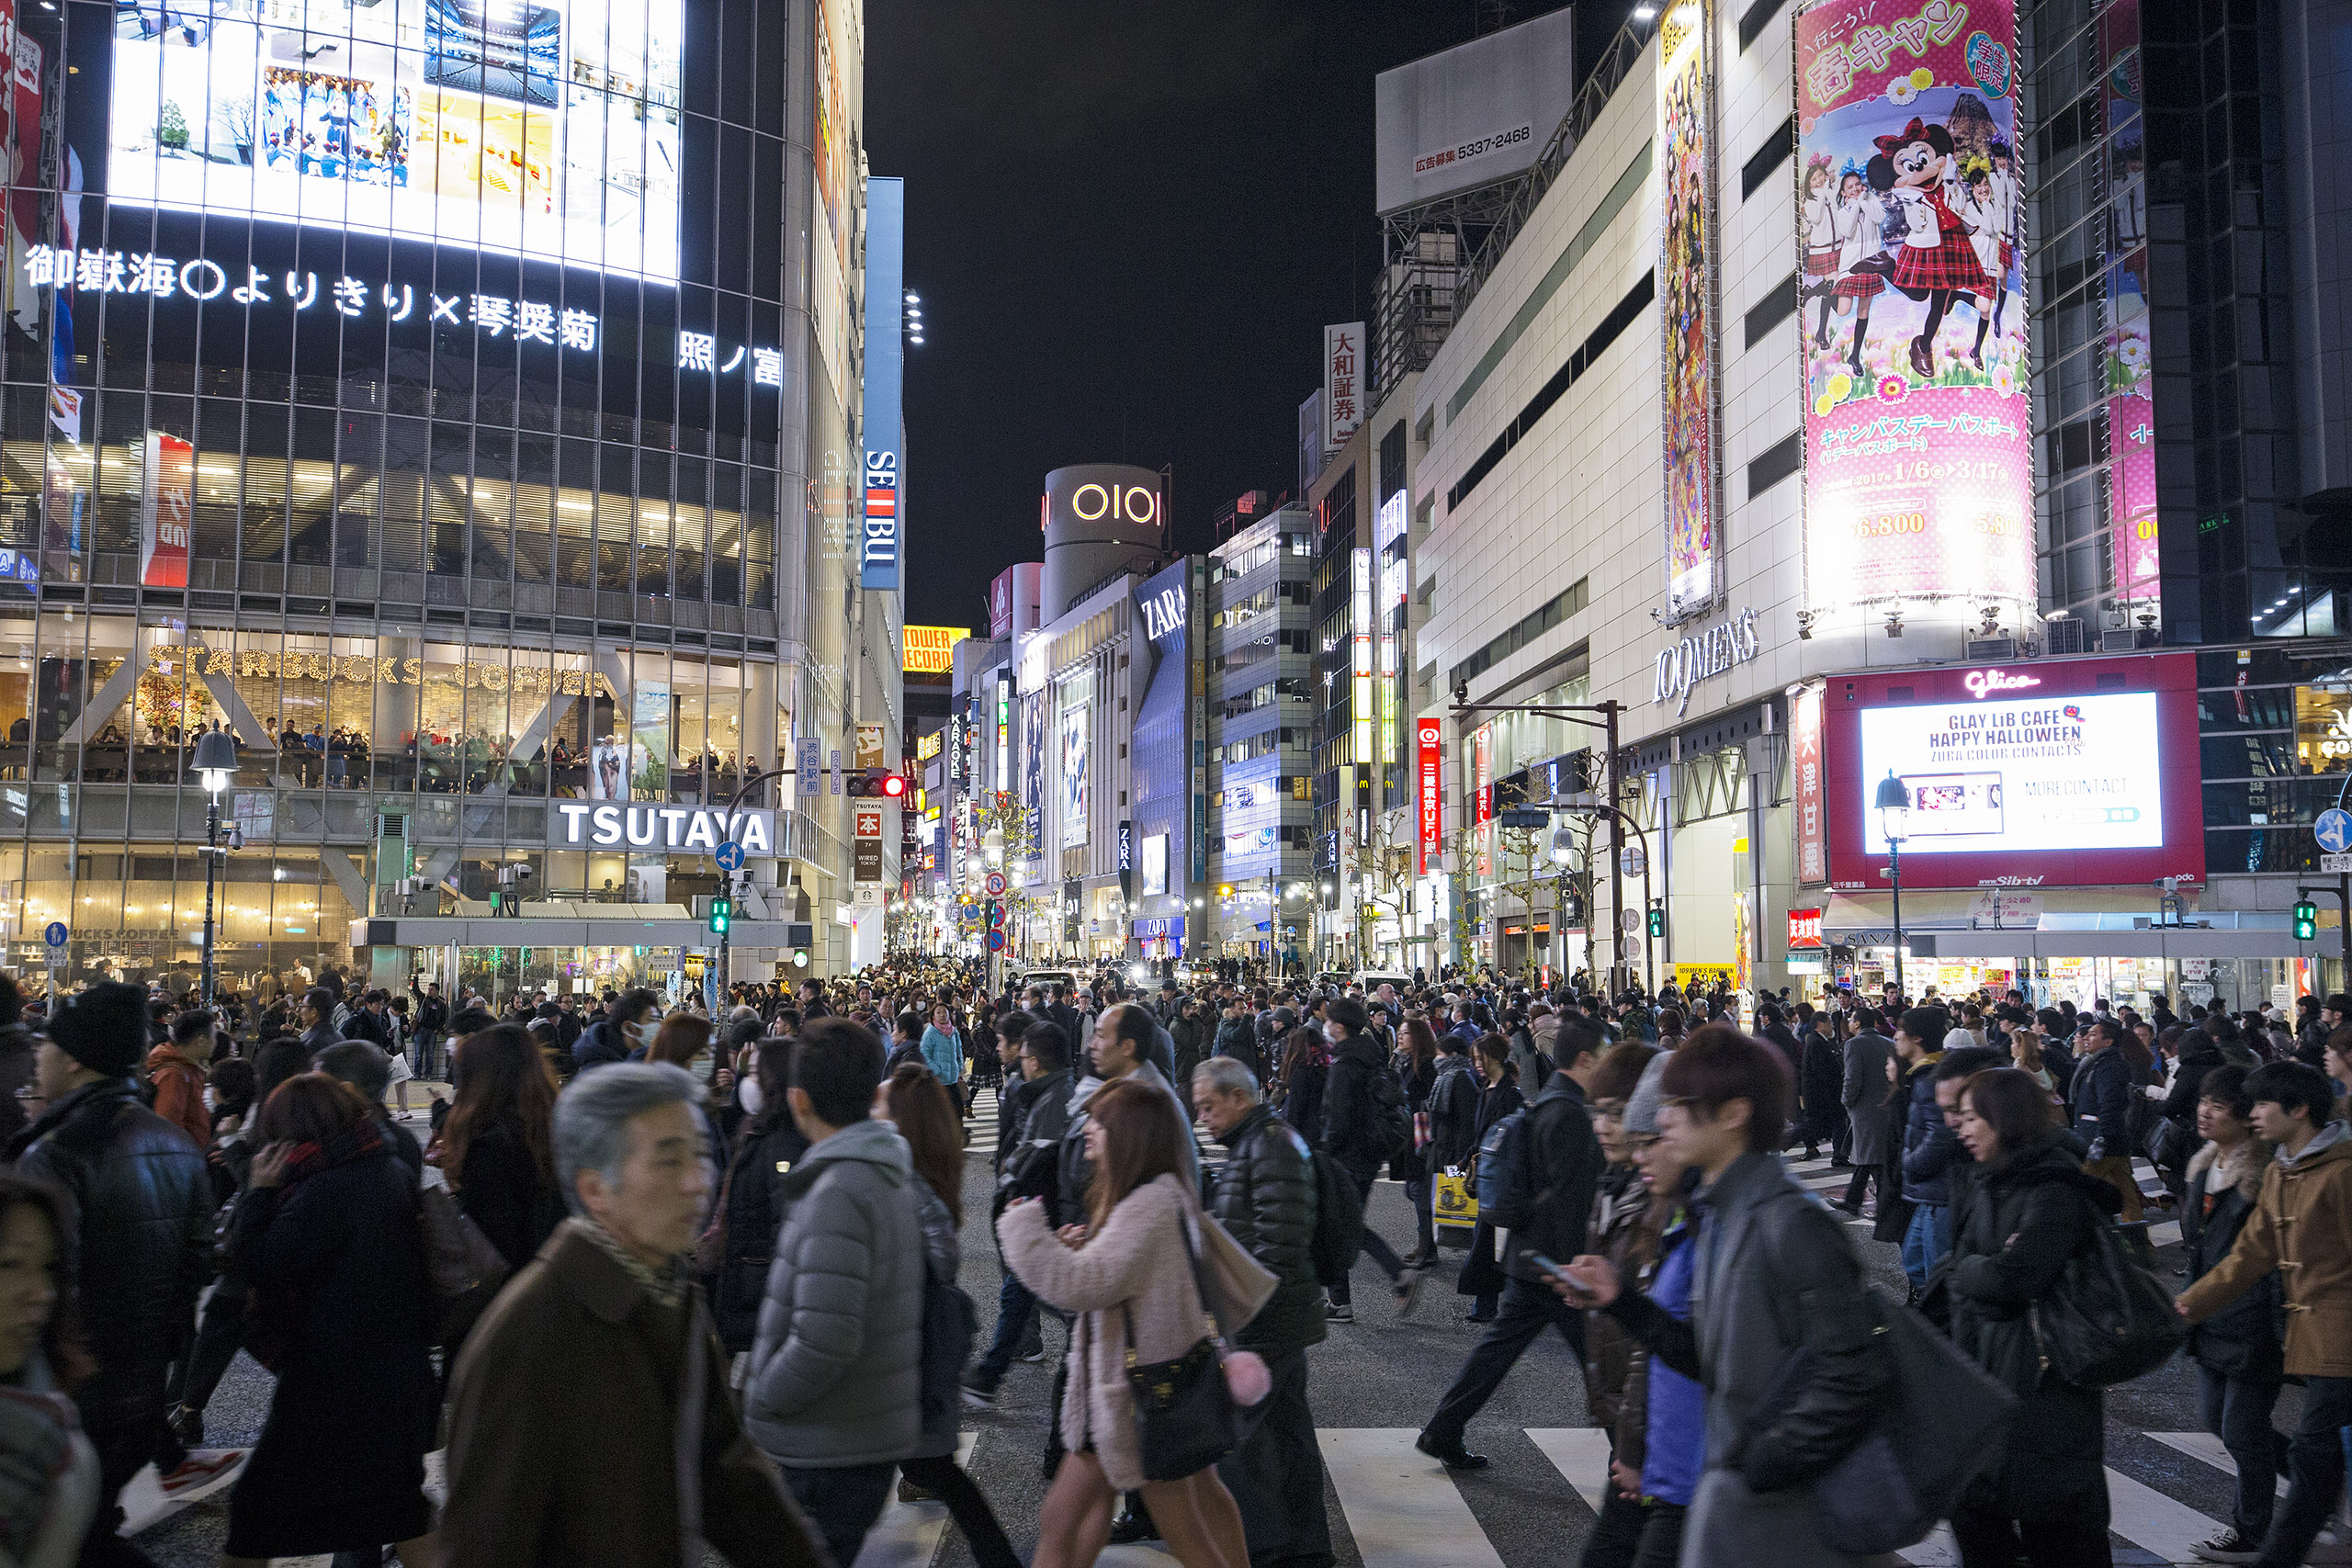 Crowds of people at Shibuya Crossing